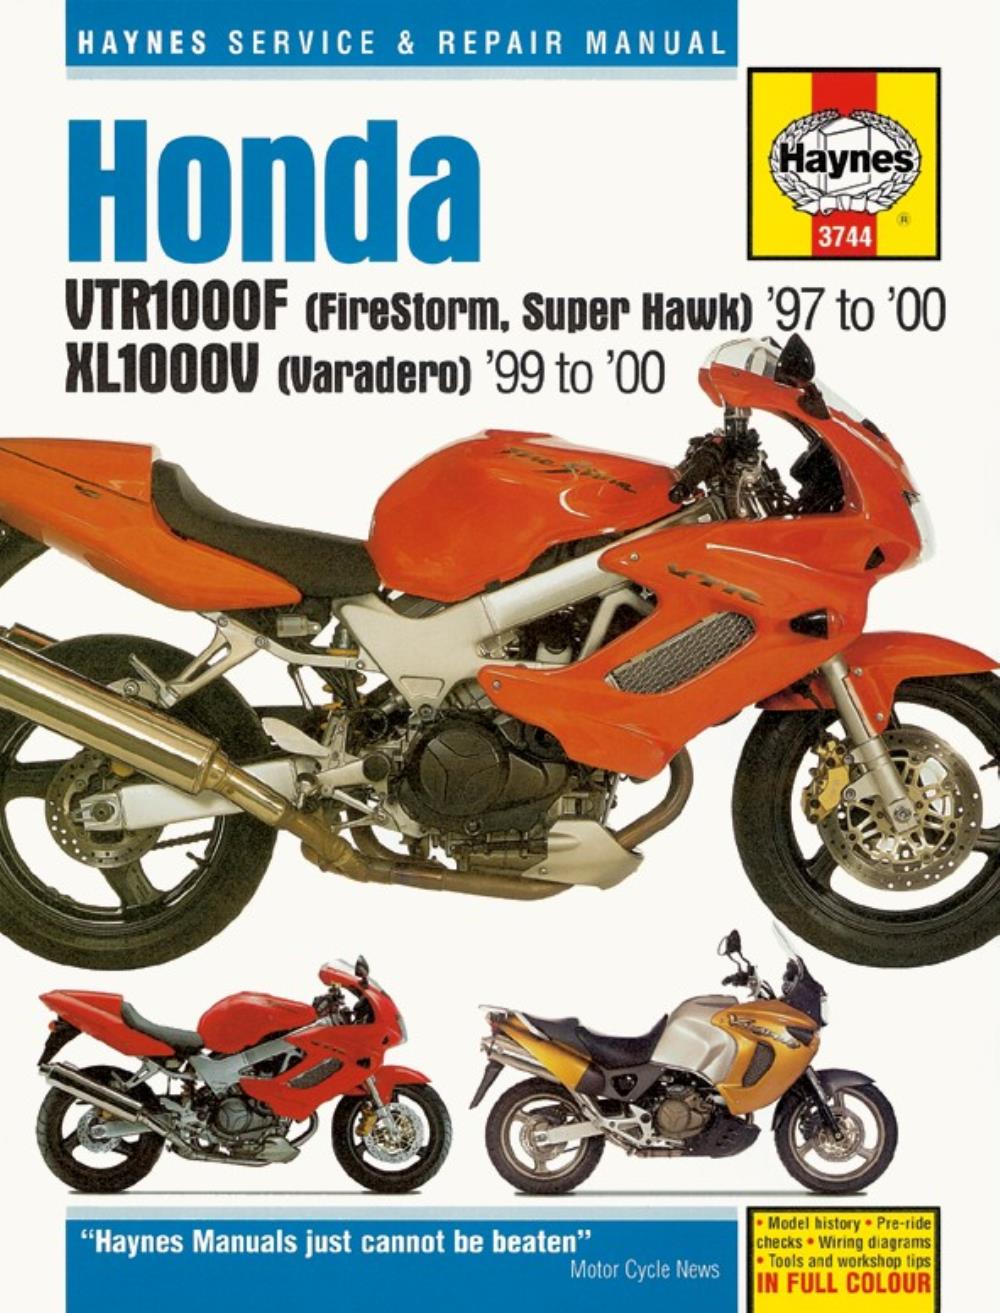 Мануалы и документация для Honda XL1000V Varadero